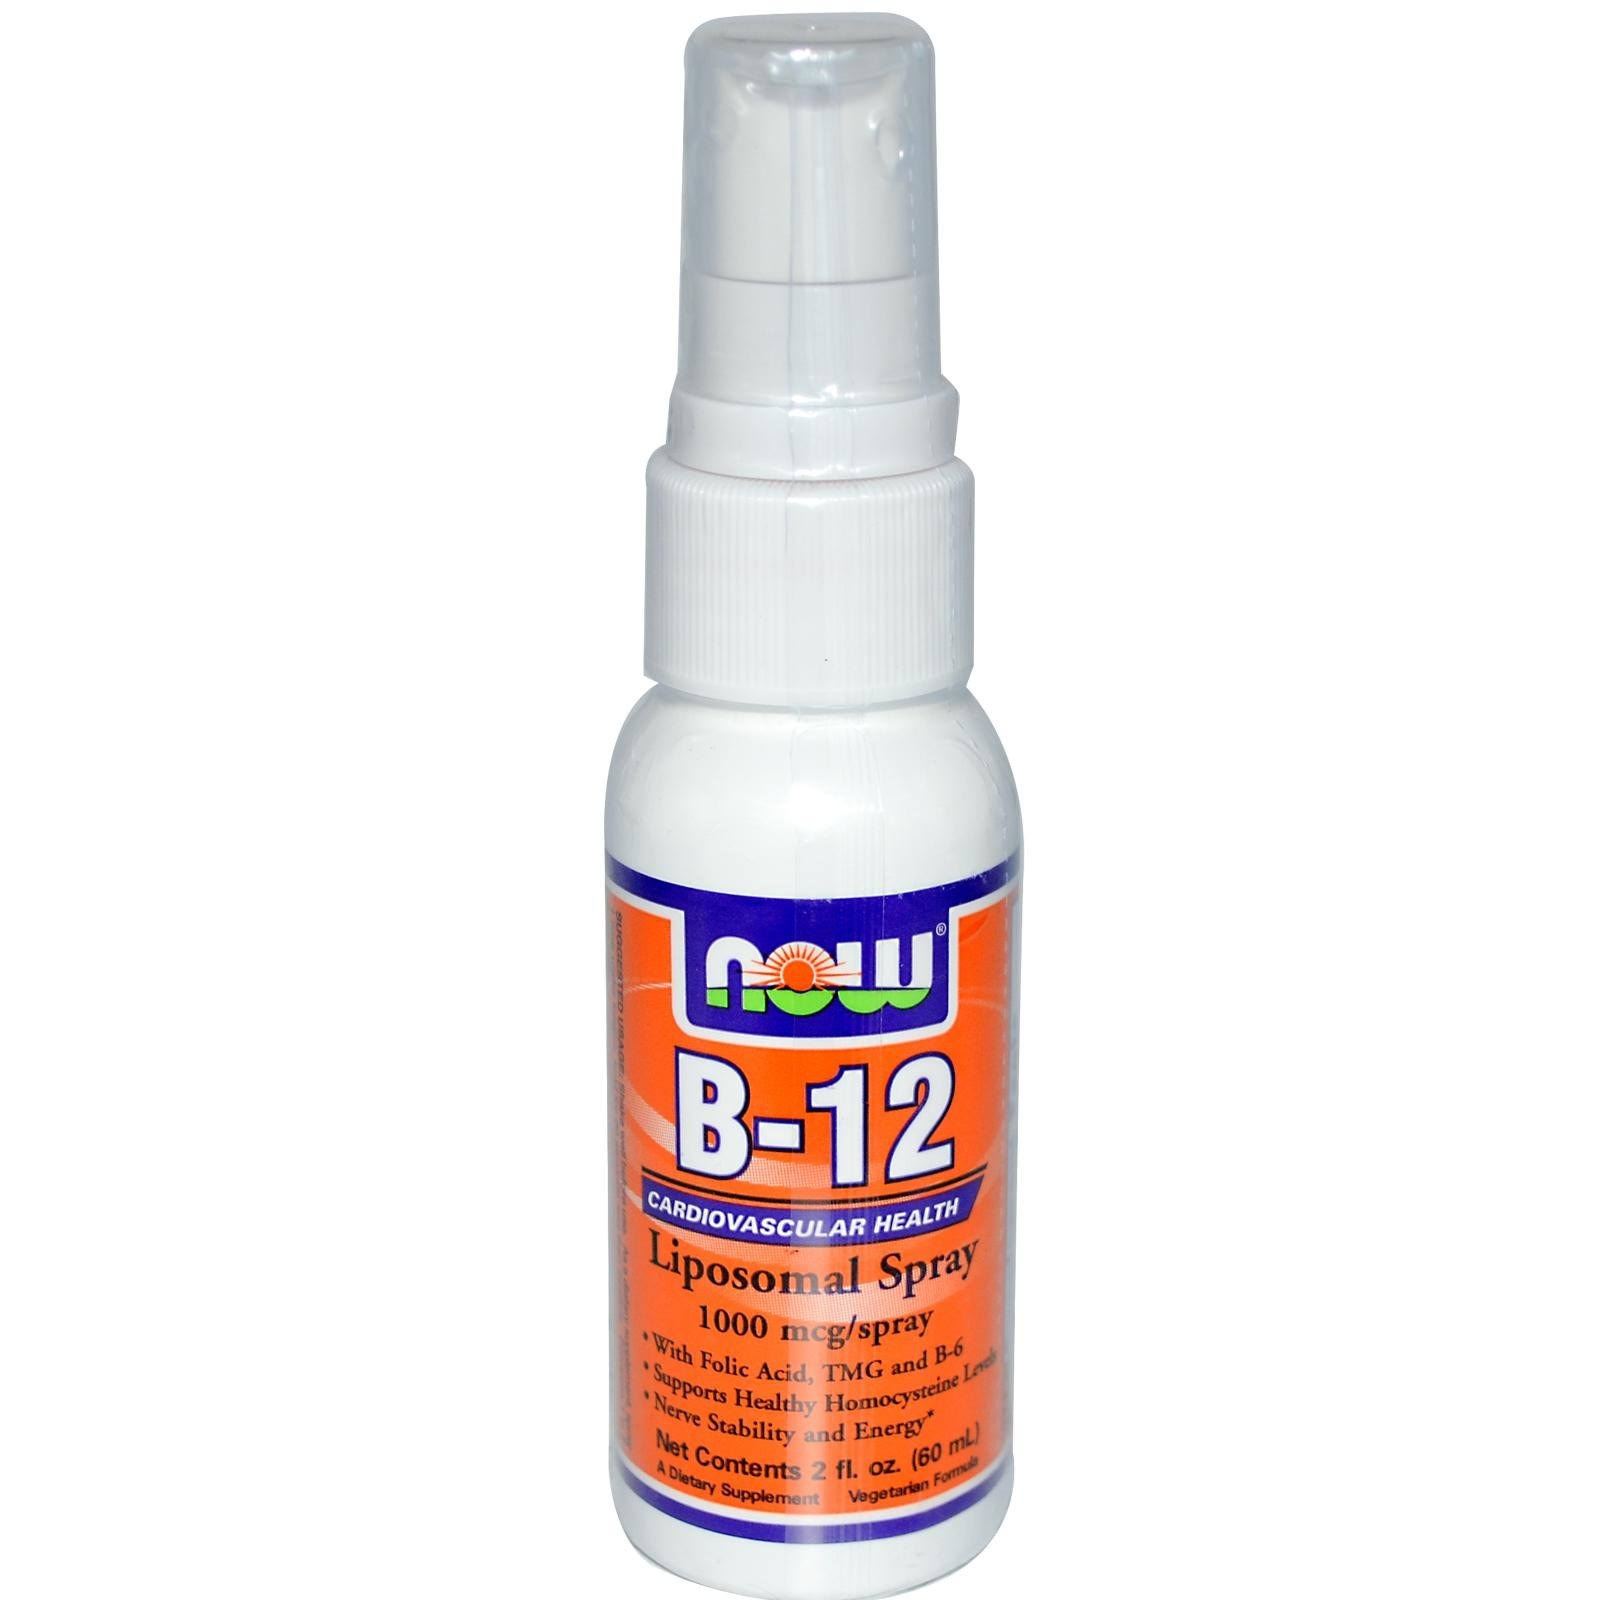 Now Vitamin B-12 Liposomal Spray